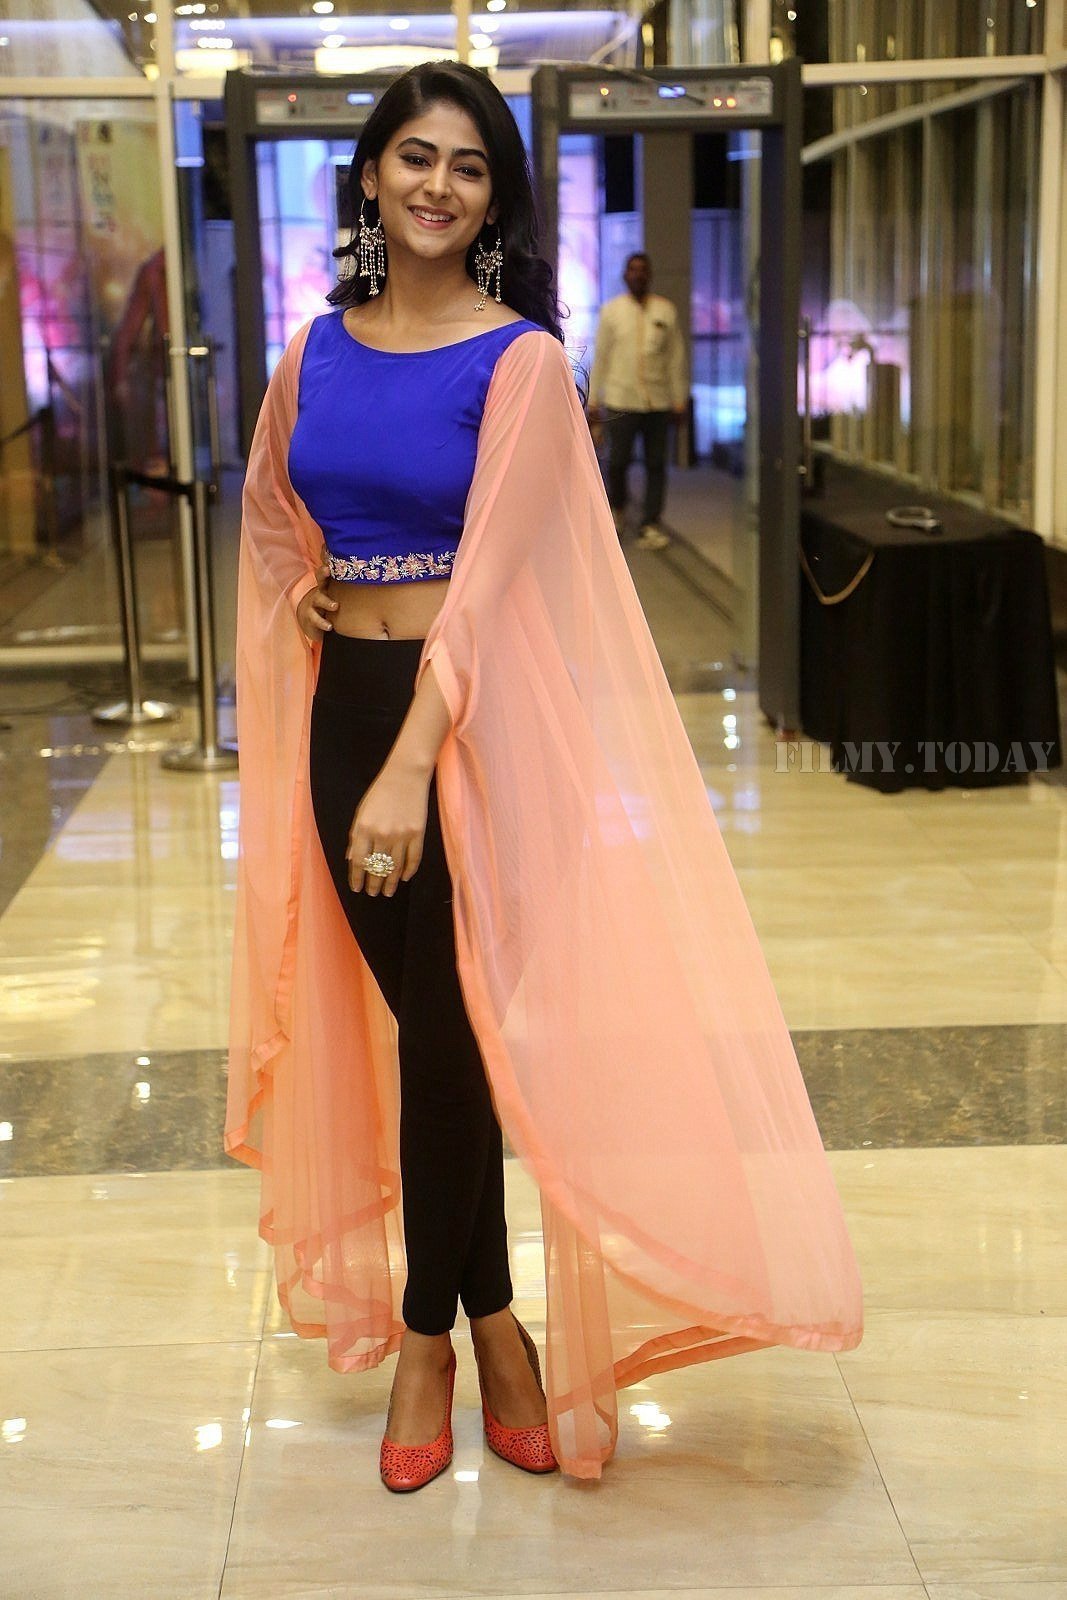 Actress Palak Lalwani Hot Stills at Juvva Movie Audio Launch | Picture 1565575